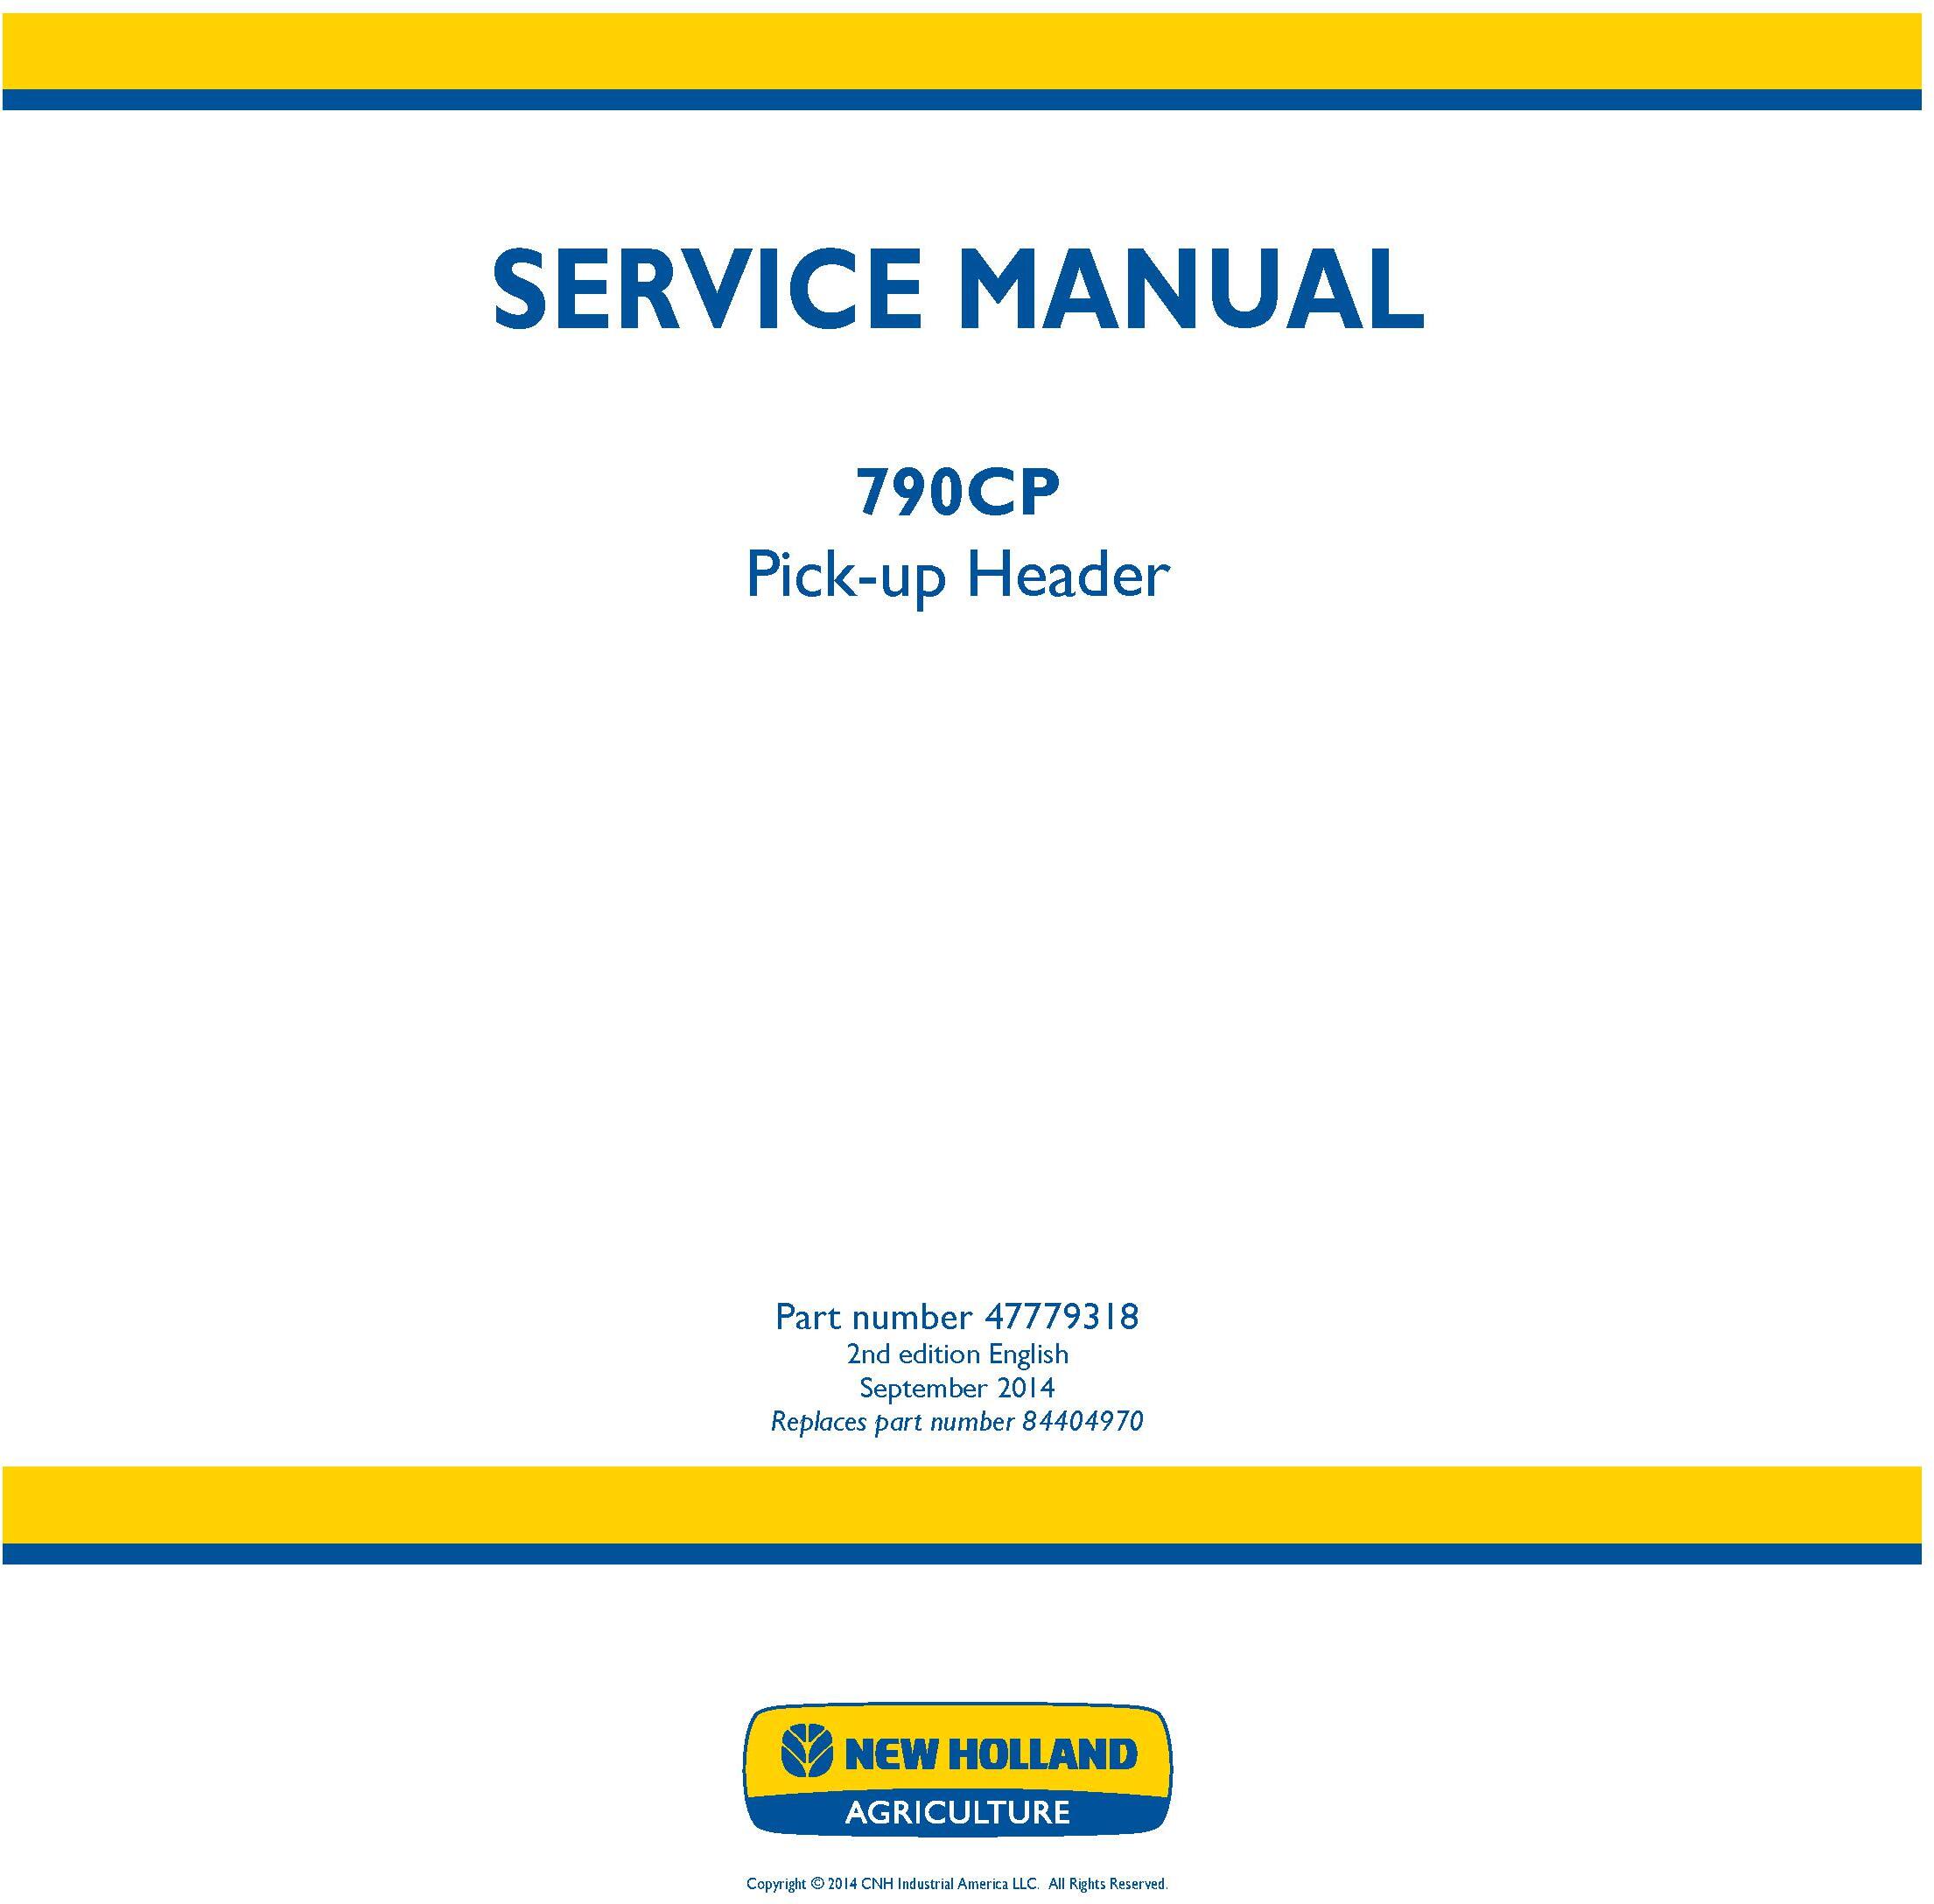 New Holland 790CP Pick-up Header Service Manual